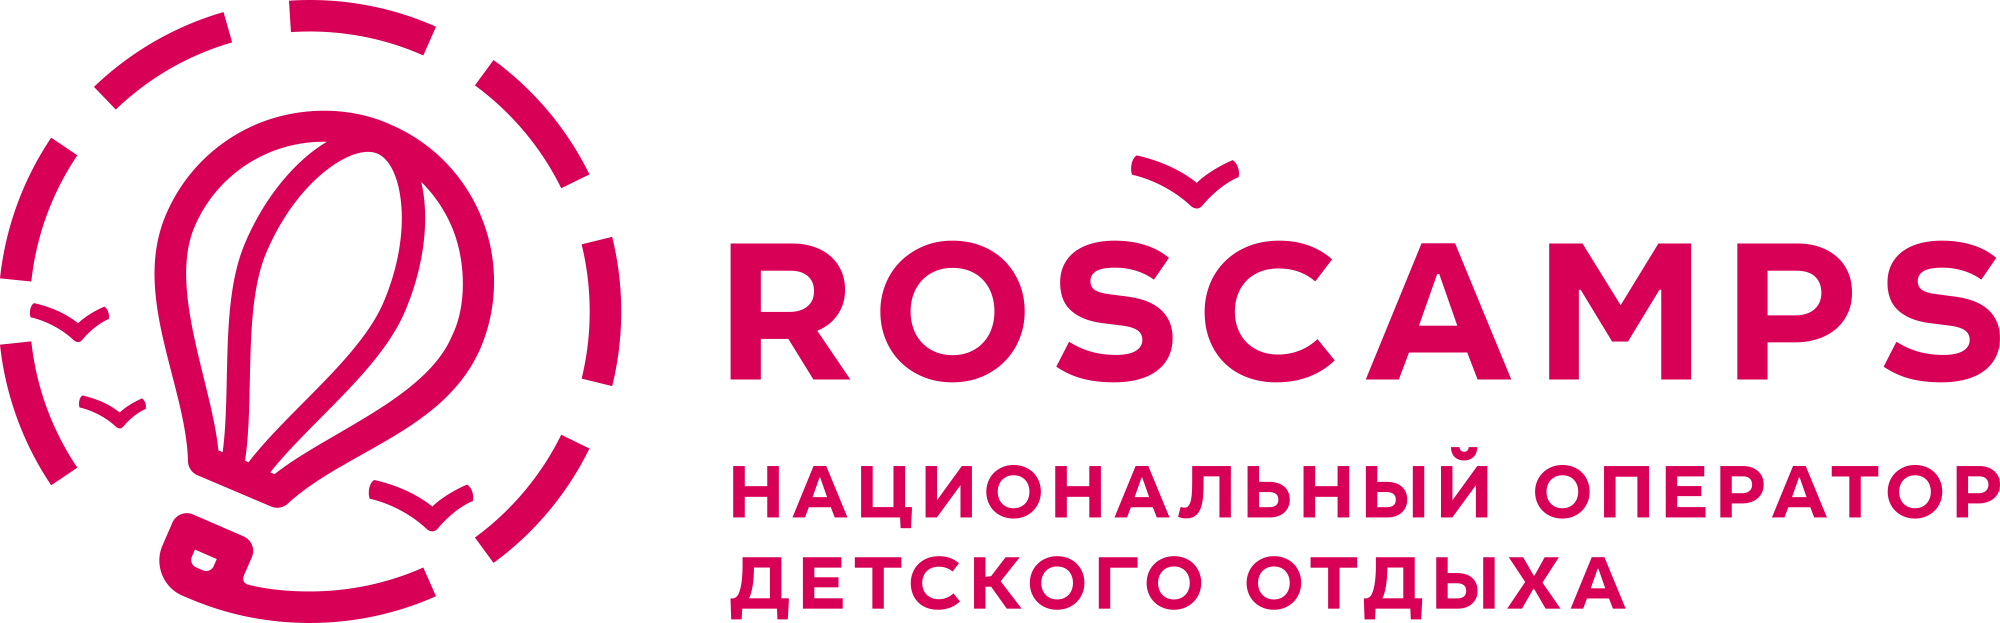 roscamps_logo_h_p